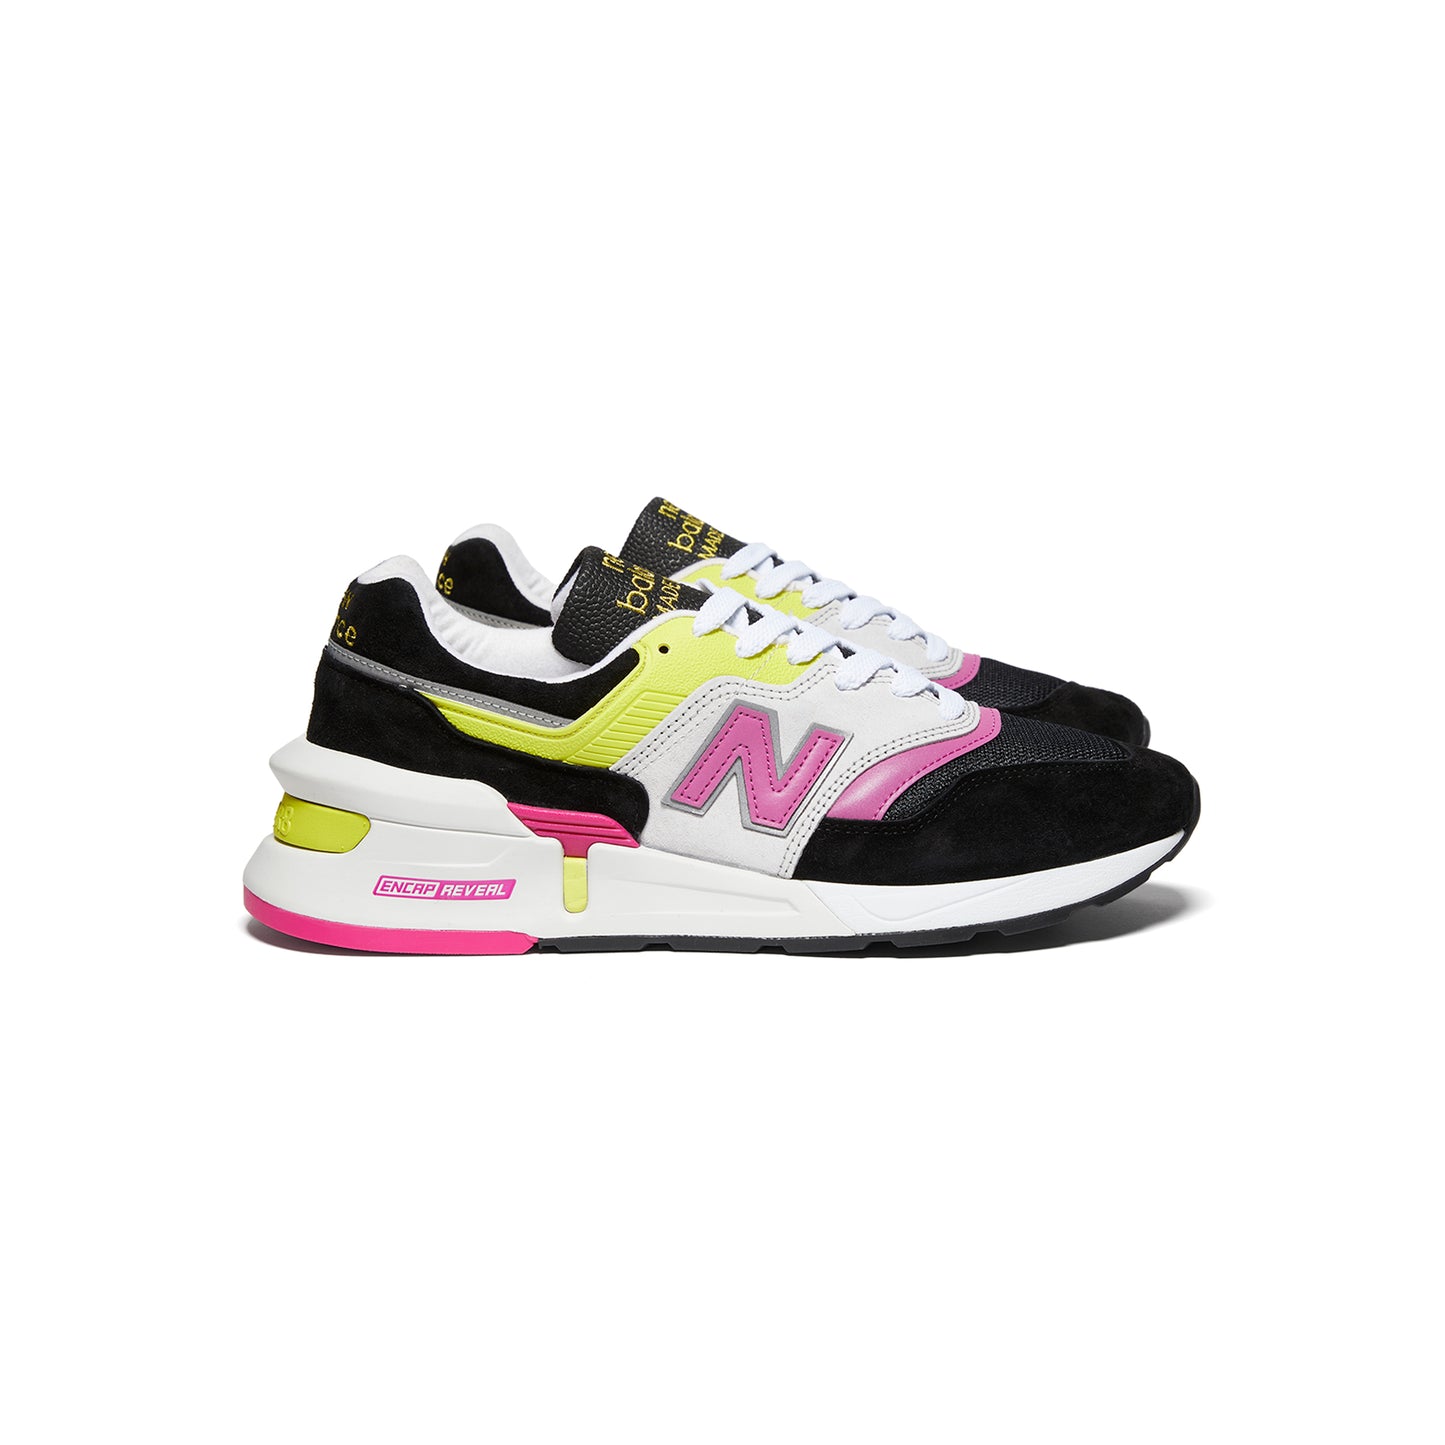 New Balance 997 (Black/Pink)